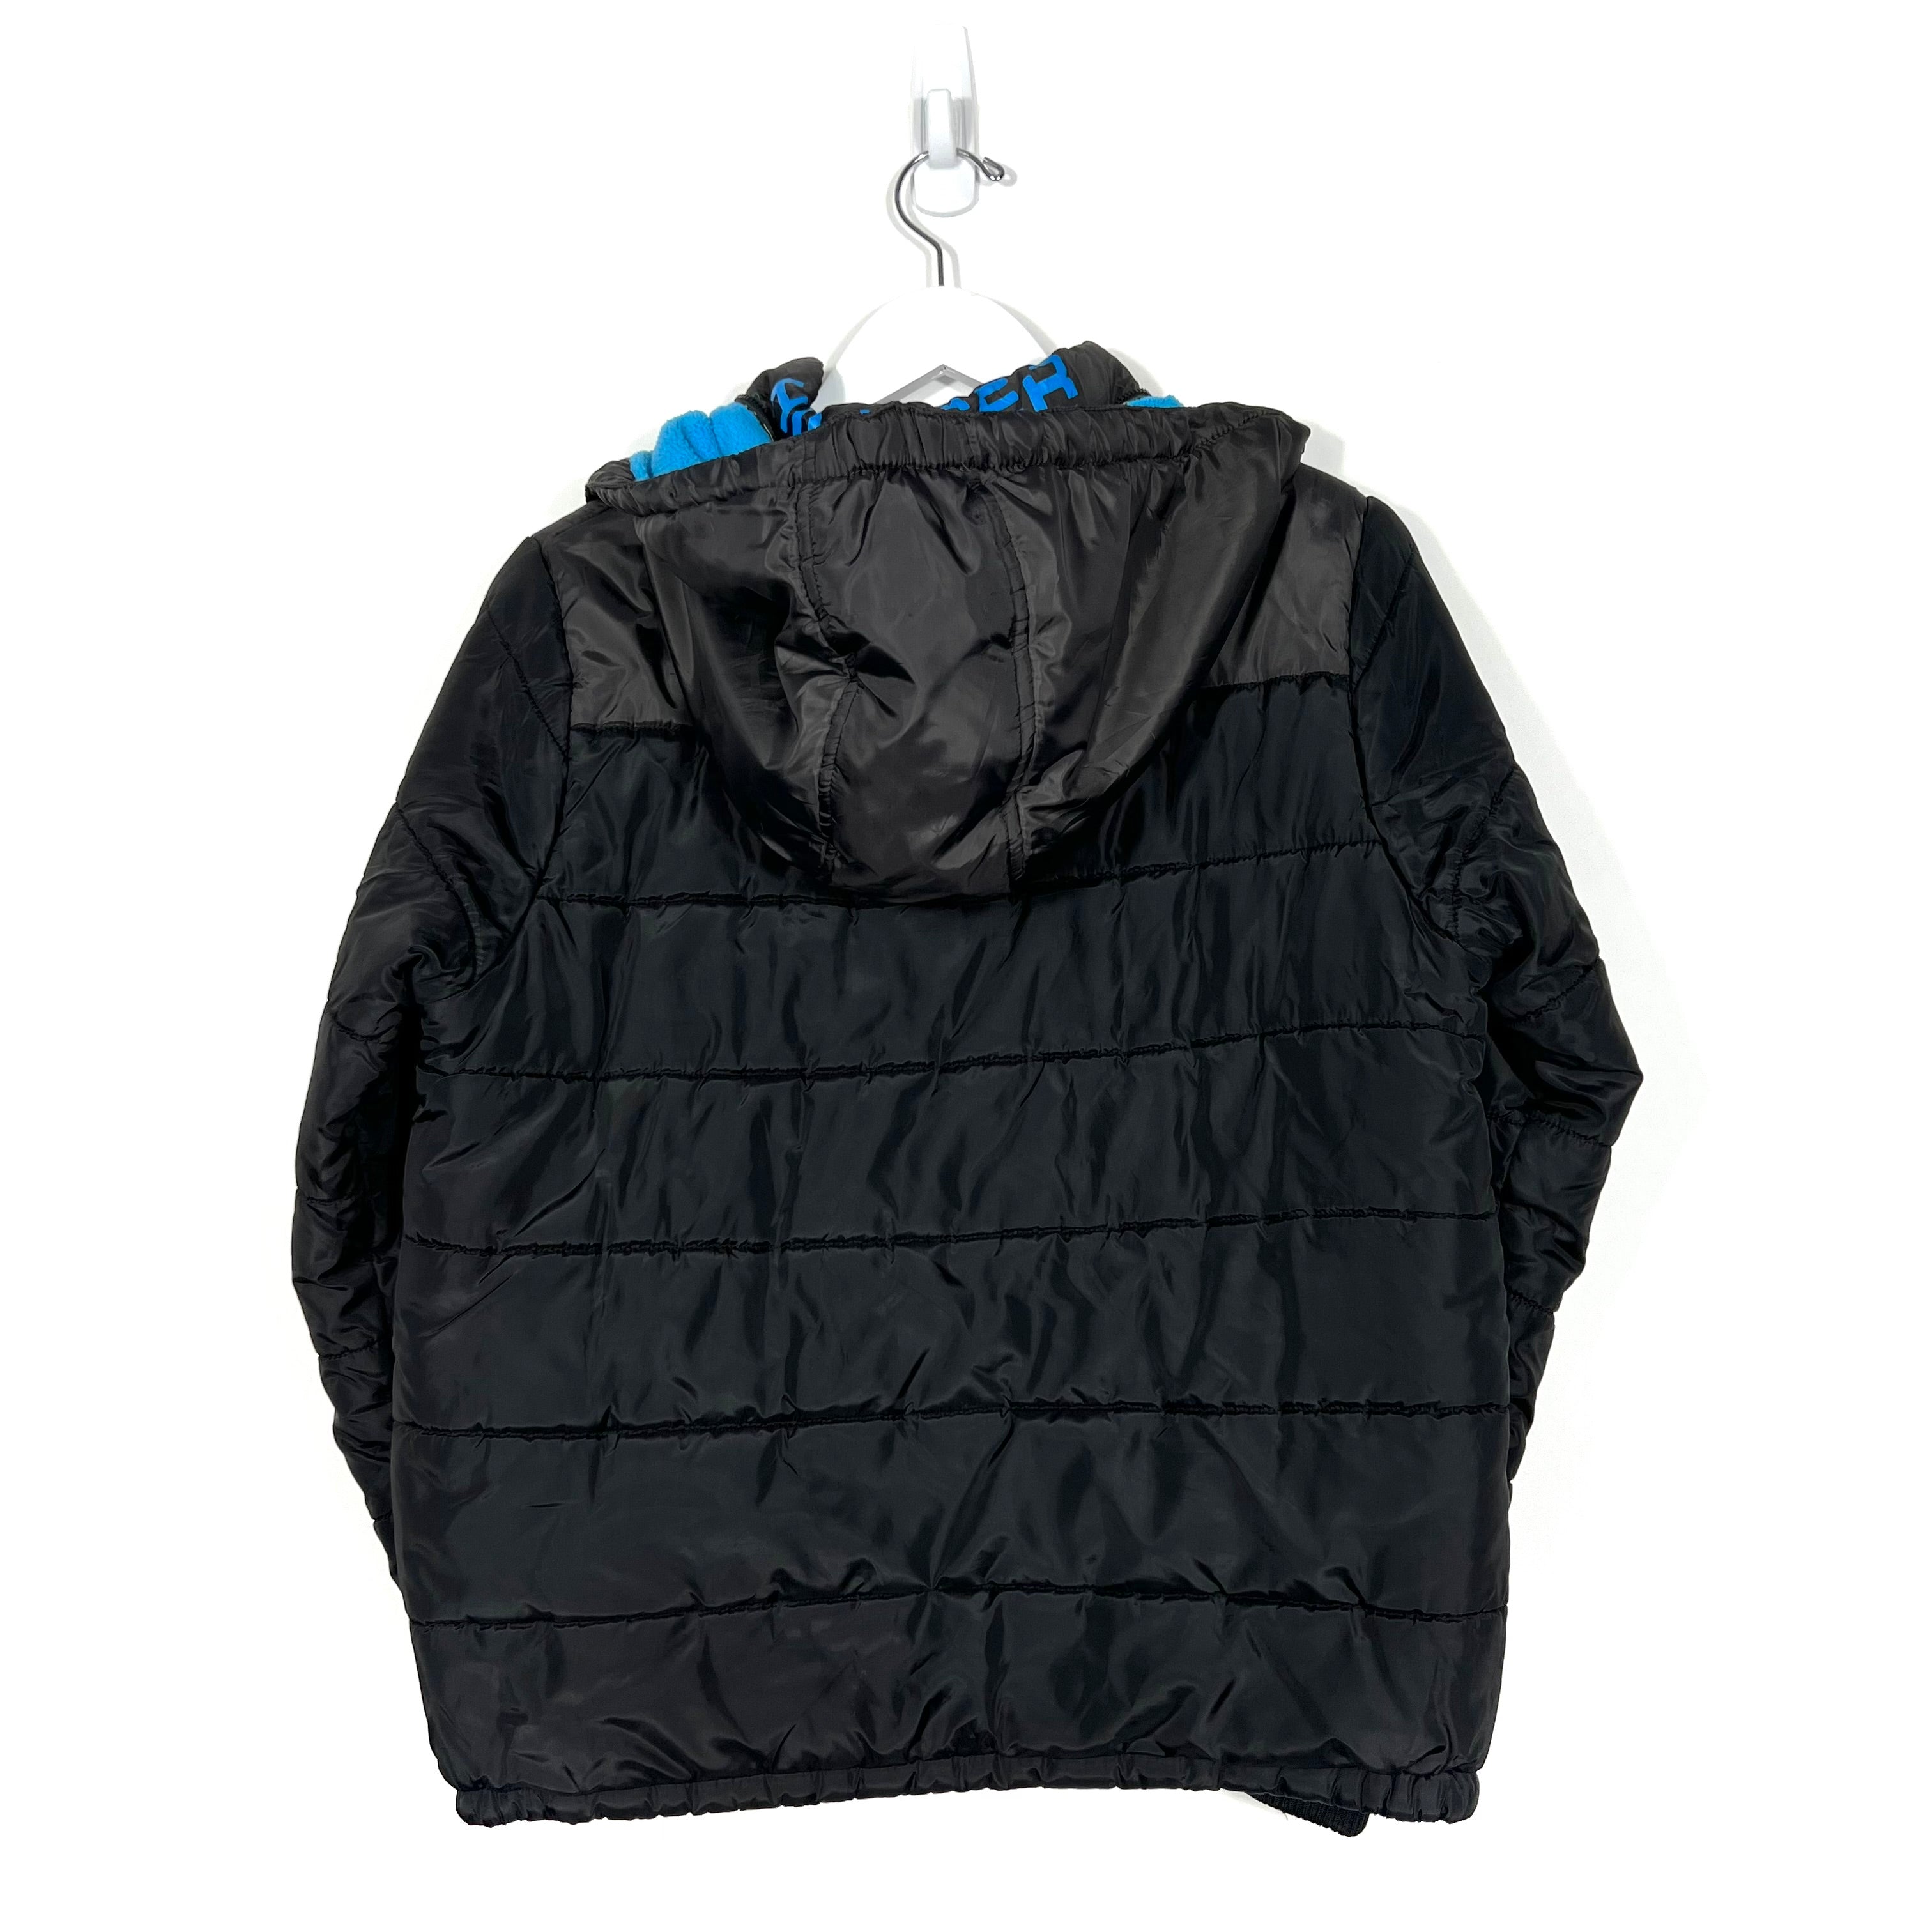 Tommy Hilfiger Fleece Lined Insulated Jacket - Women's Medium